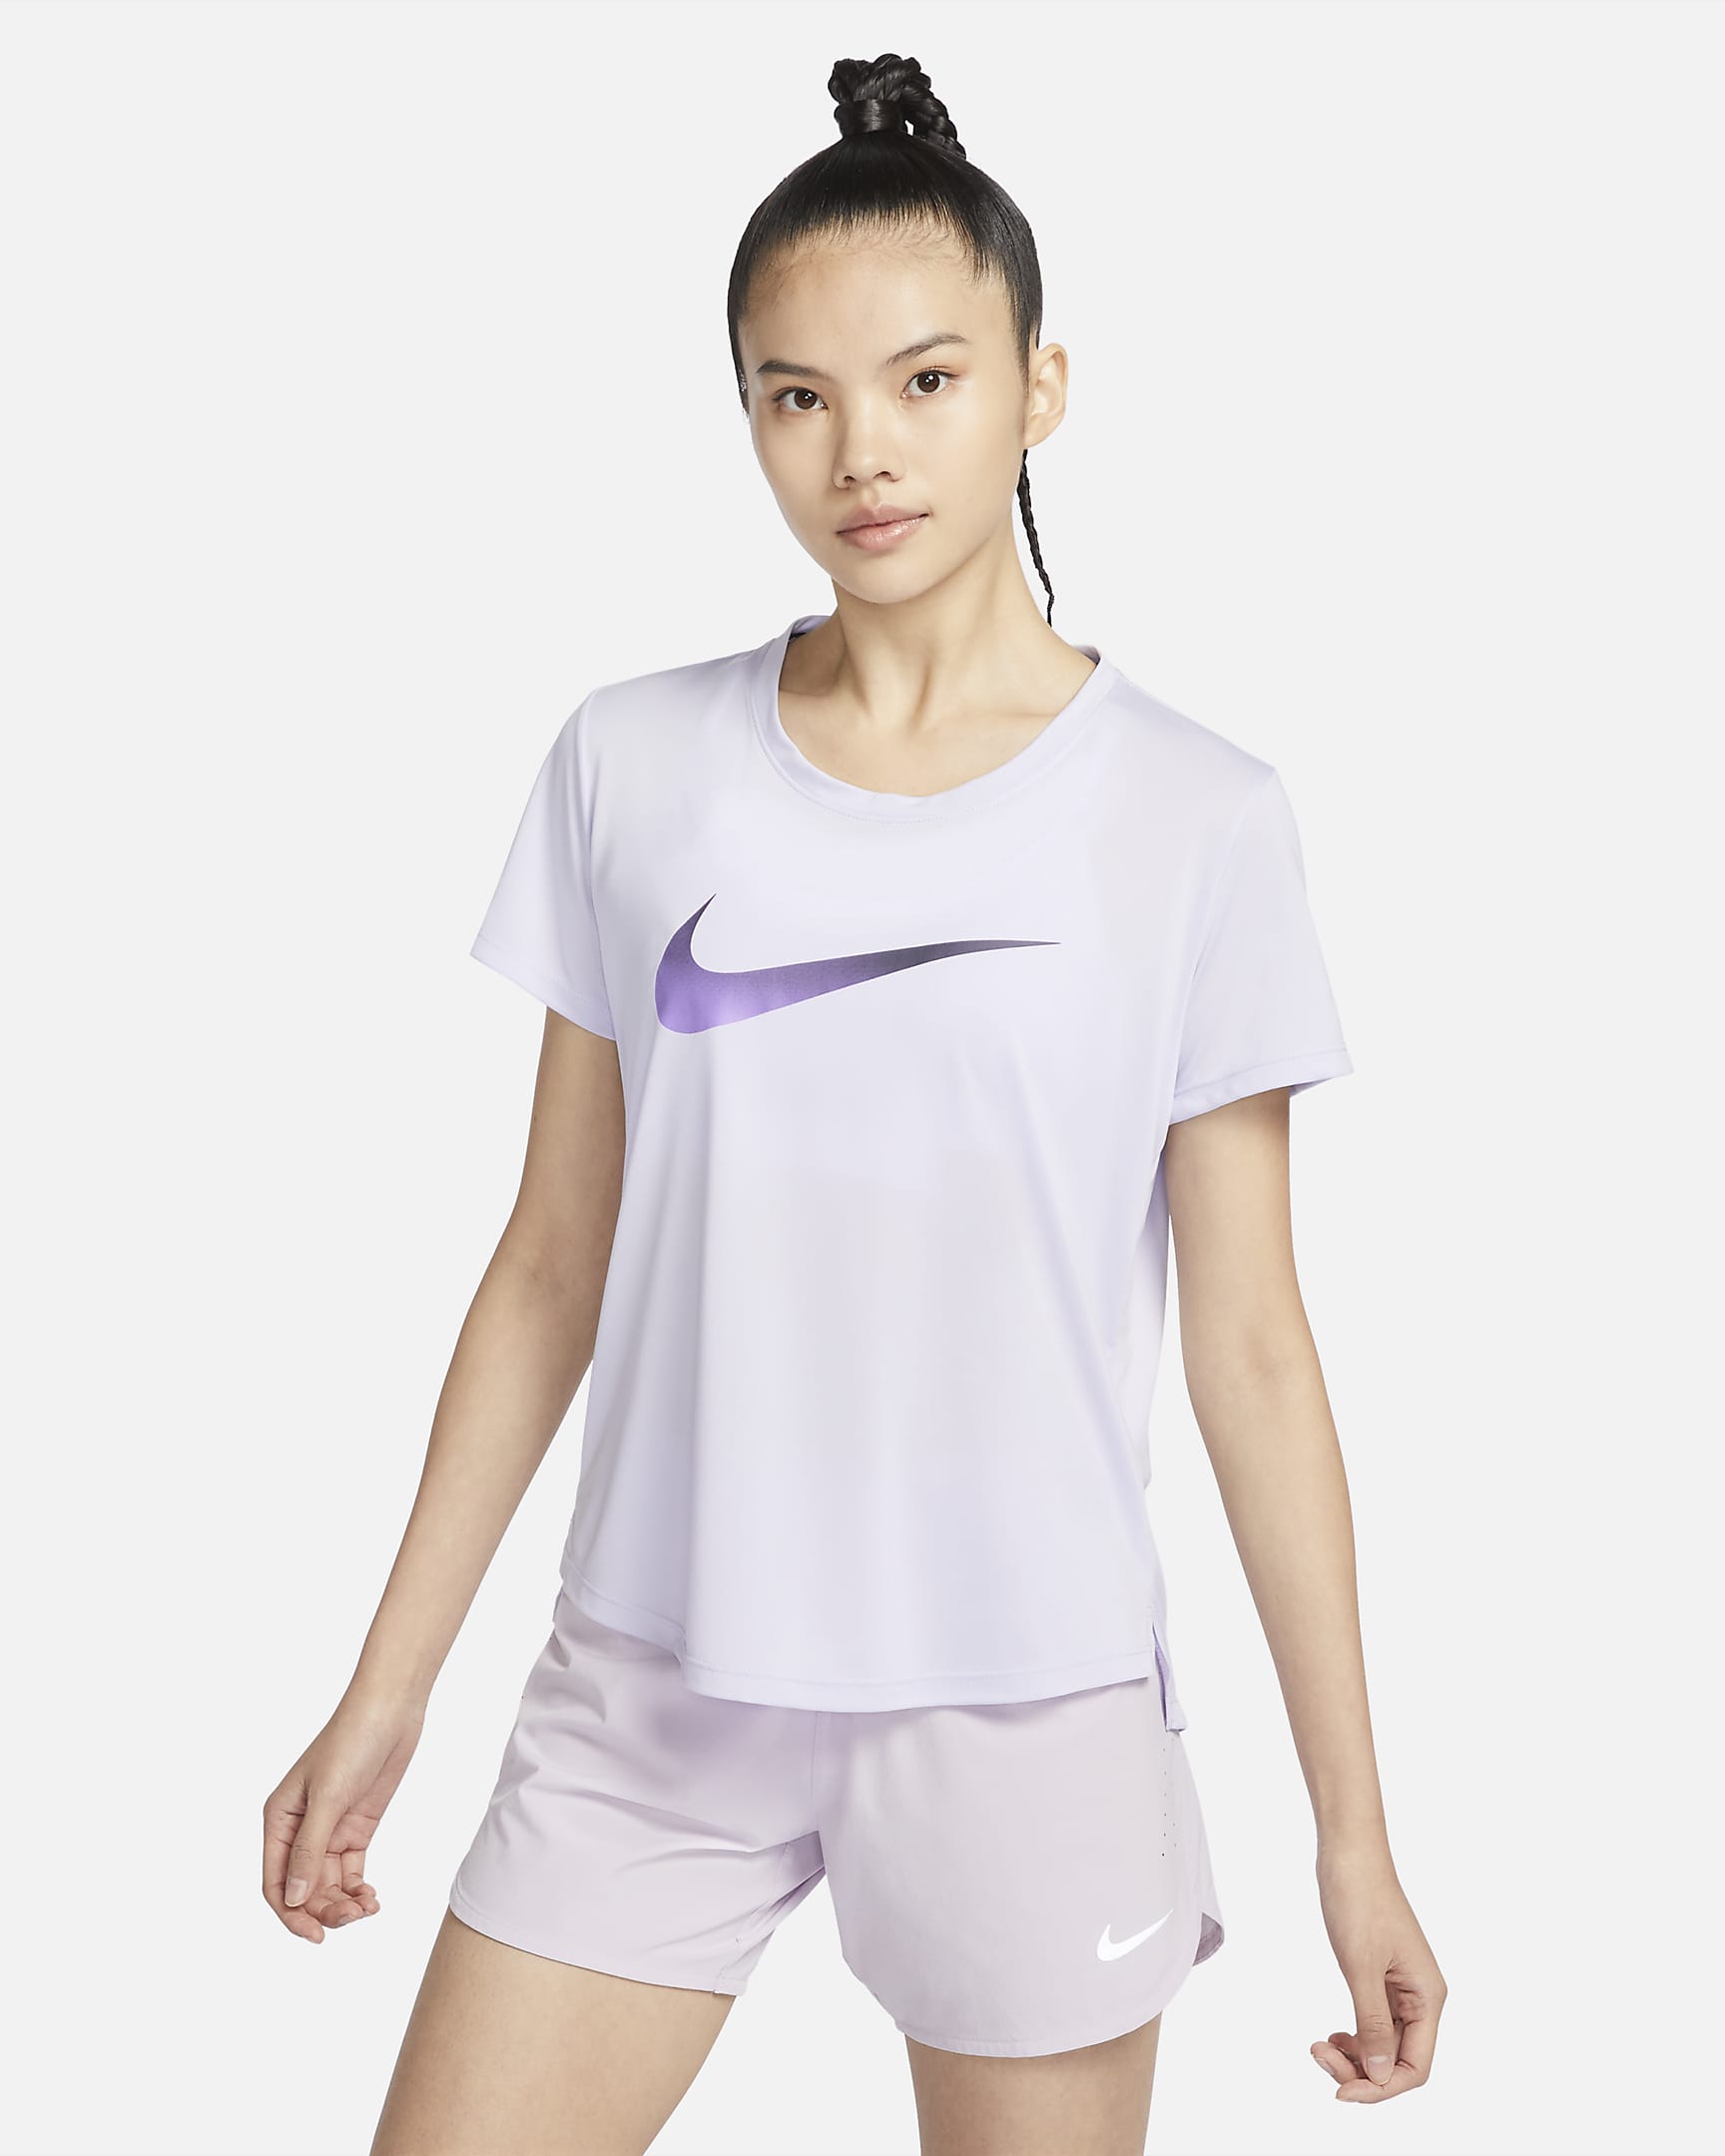 Nike Dri-FIT One Women's Short-Sleeve Running Top. Nike SG